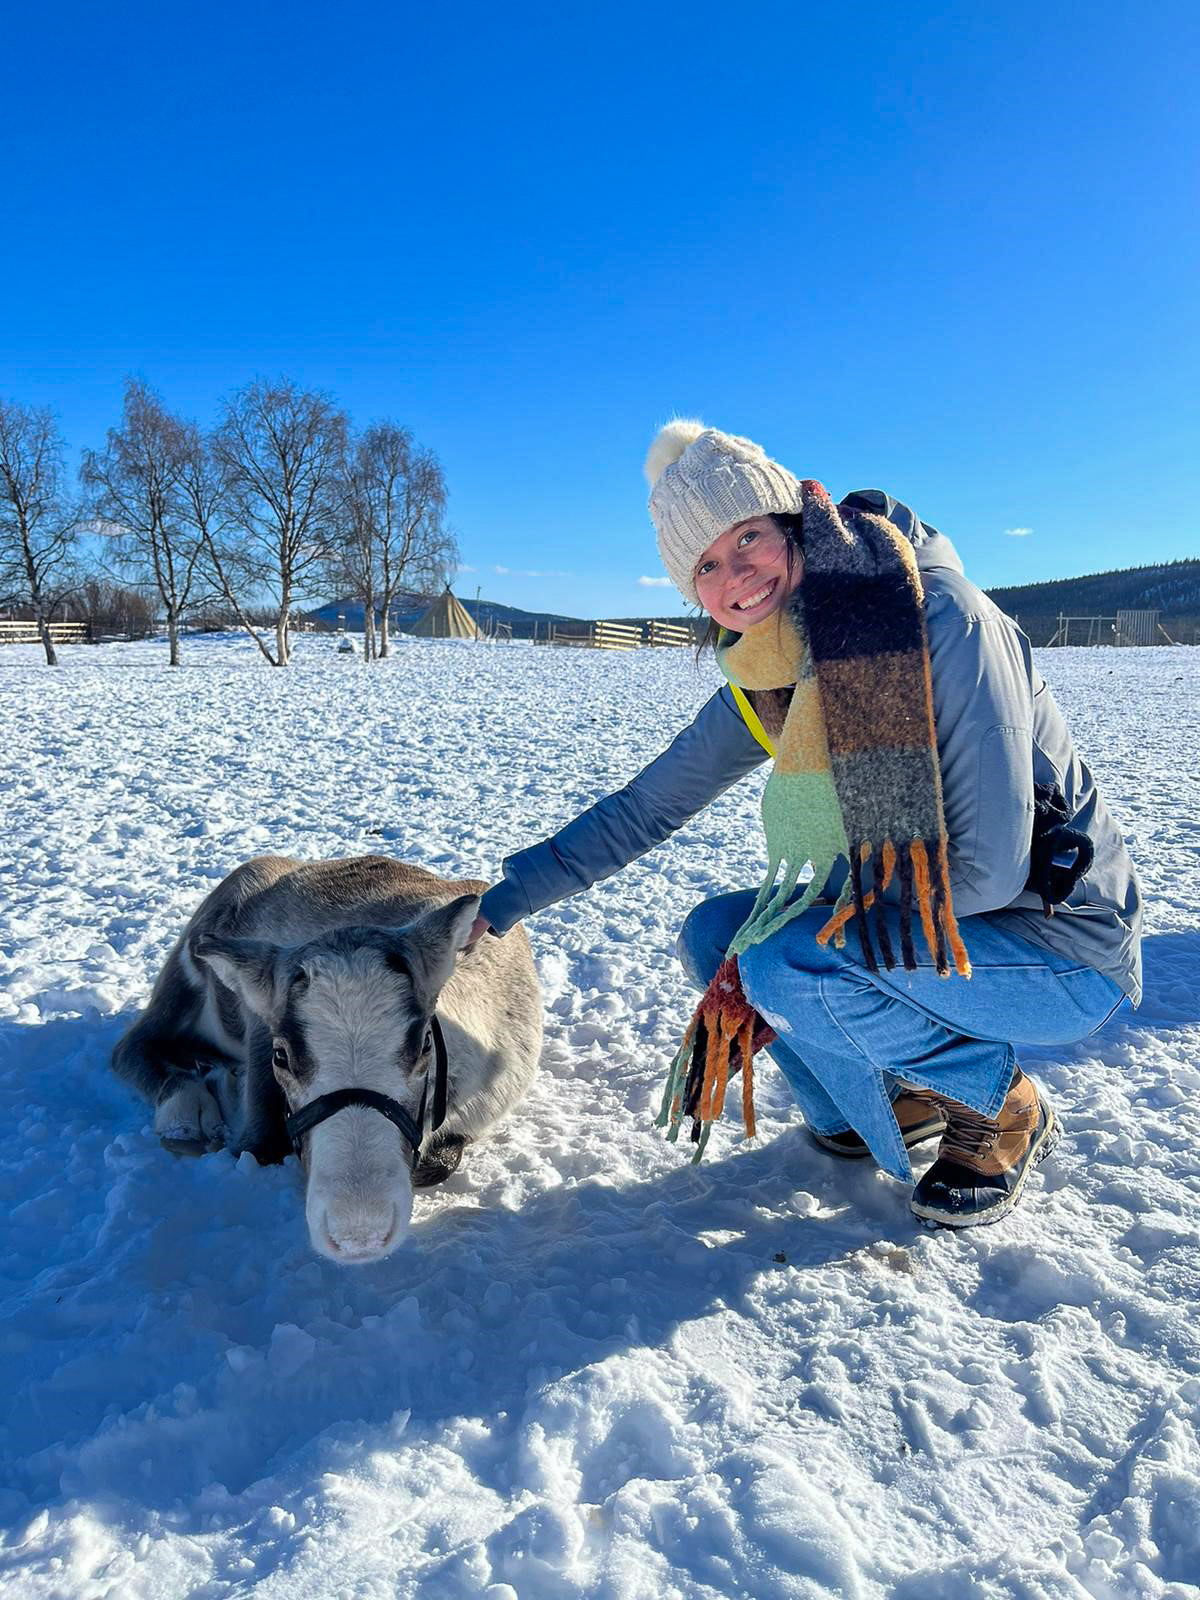 Student patting reindeer in snow